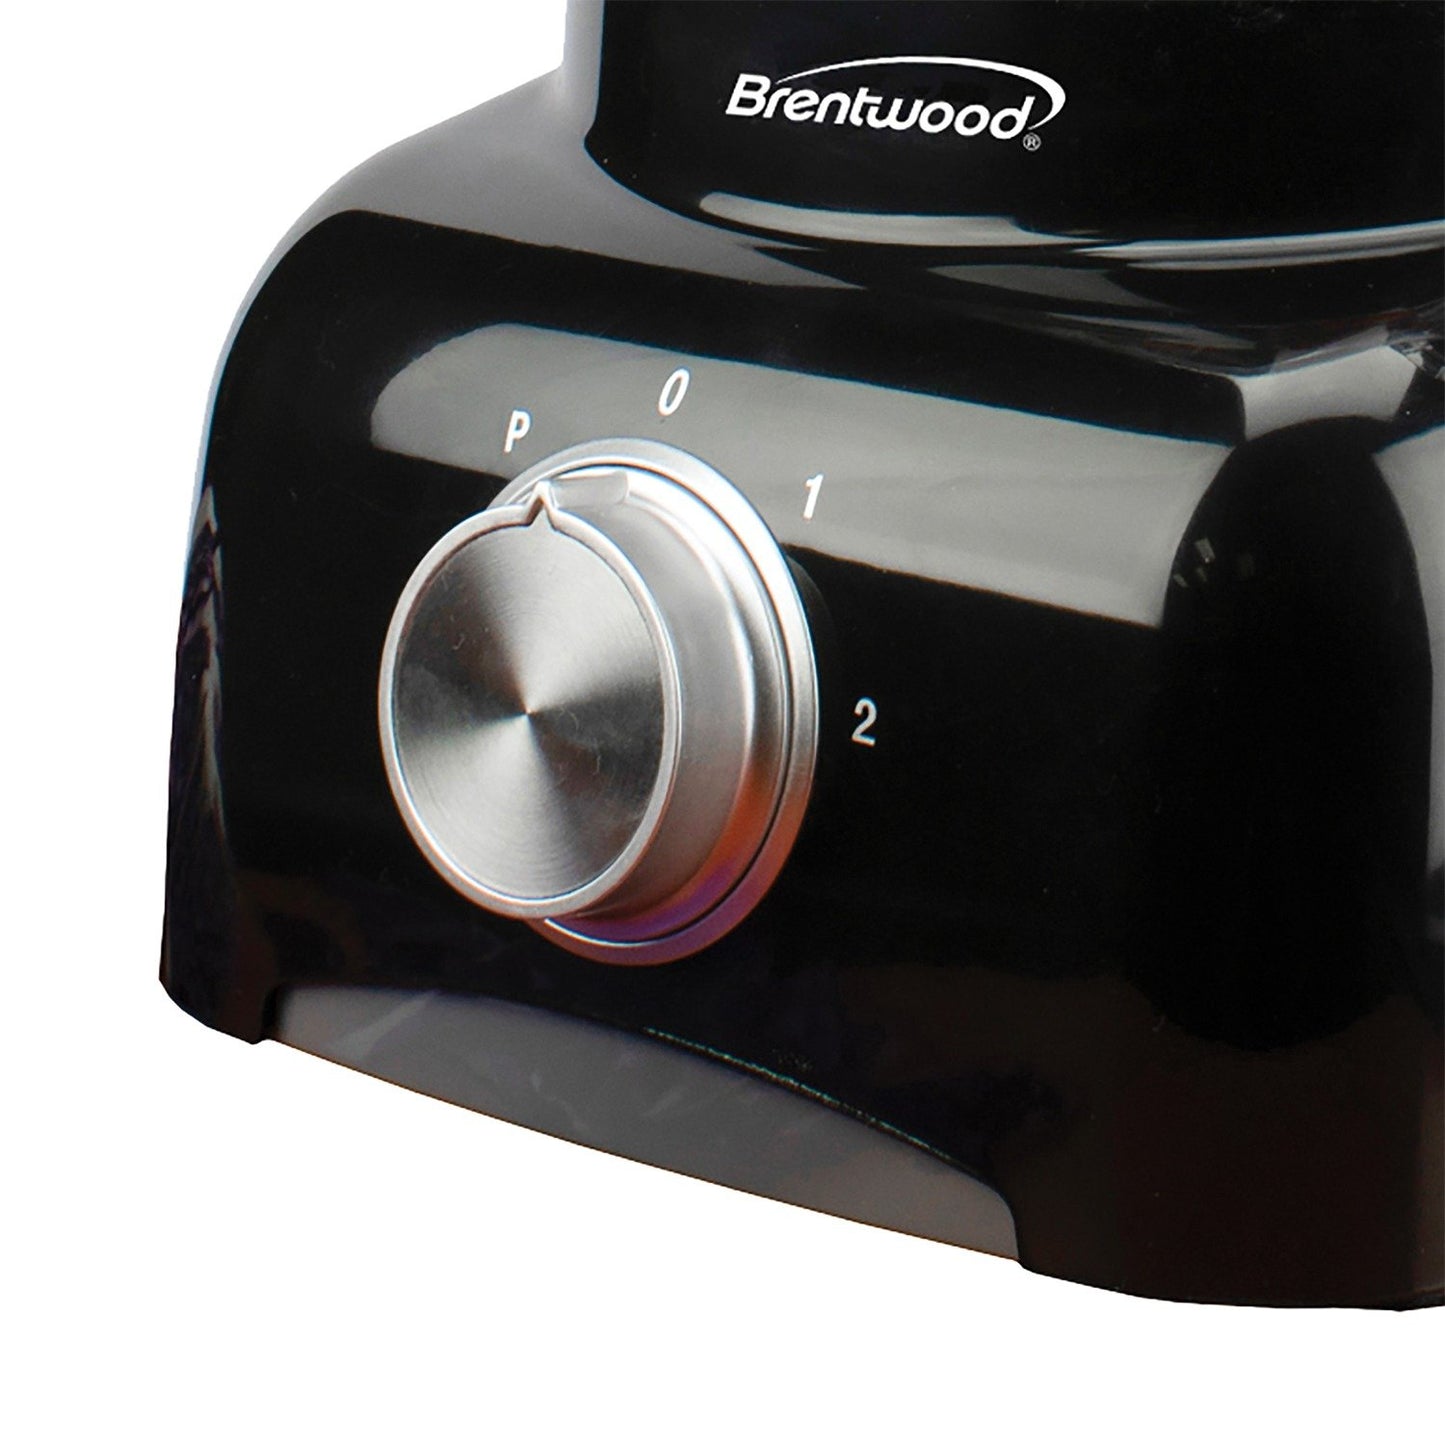 Brentwood Appl. FP-585BK 5-Cup Food Processor